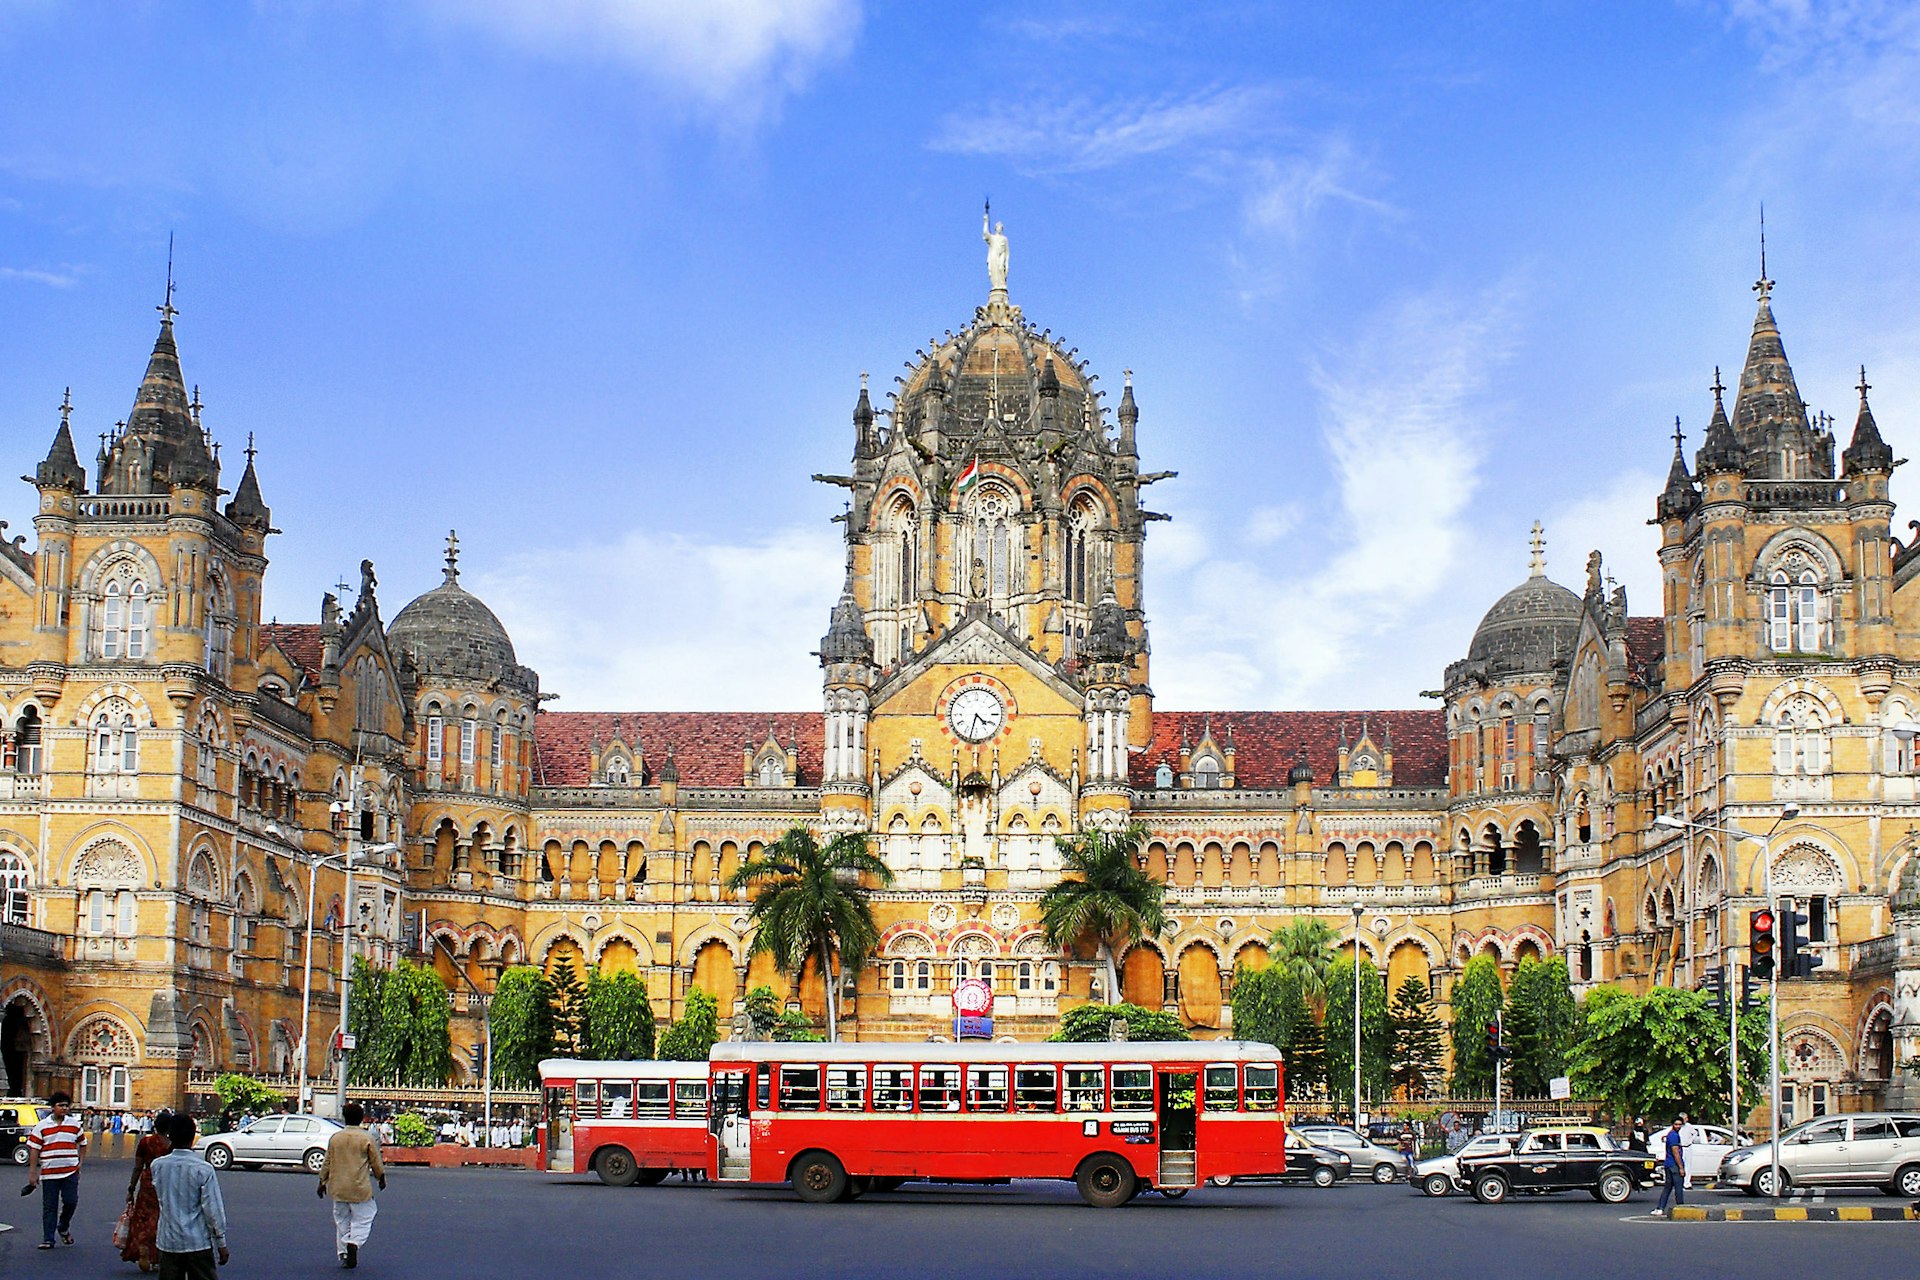 The grand frontage of Mumbai's iconic Chhatrapati Shivaji Terminus train station